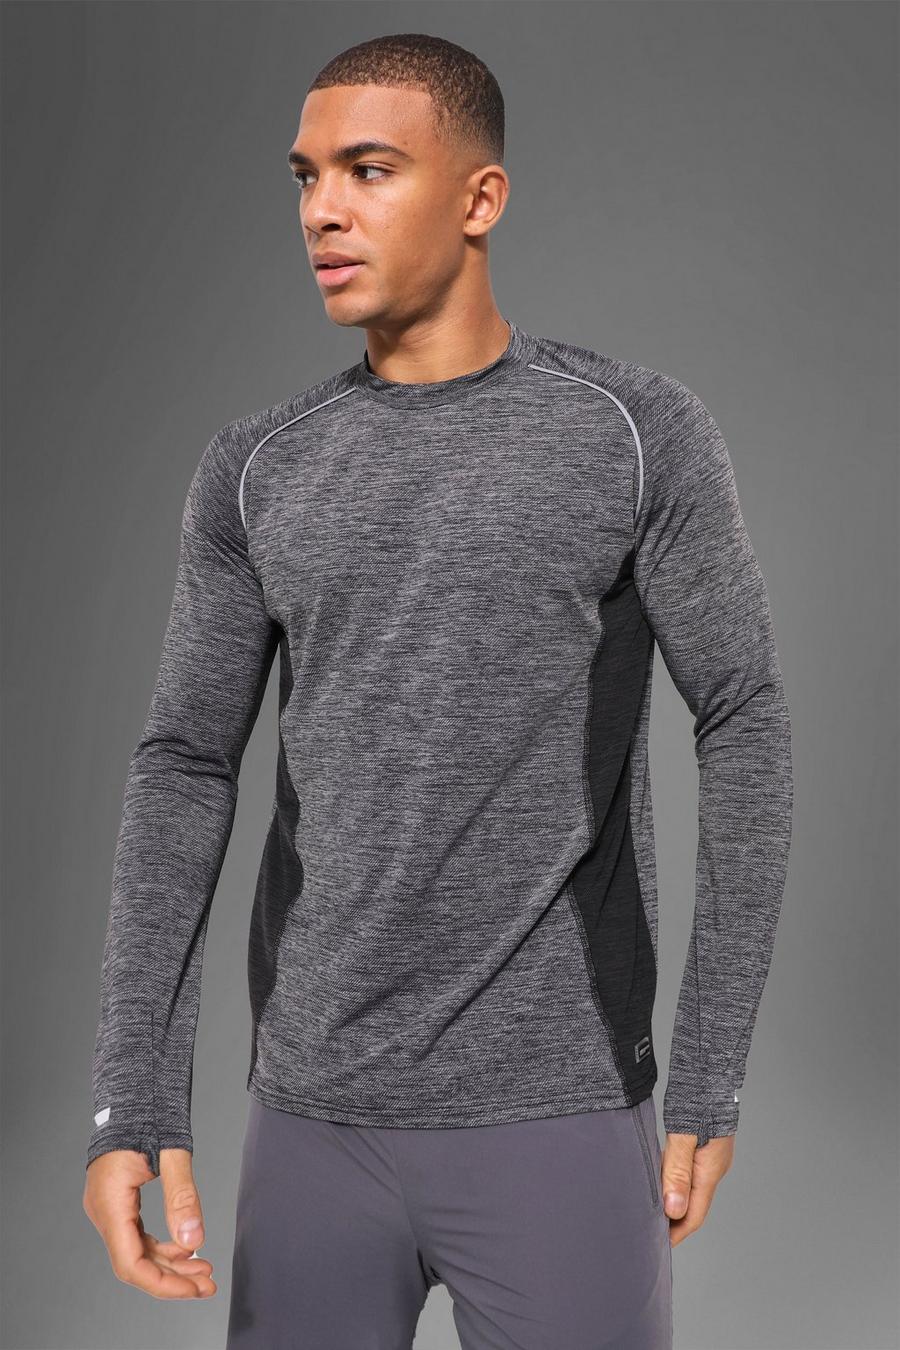 Charcoal grey Man Active Gym Lightweight Long Sleeve Top